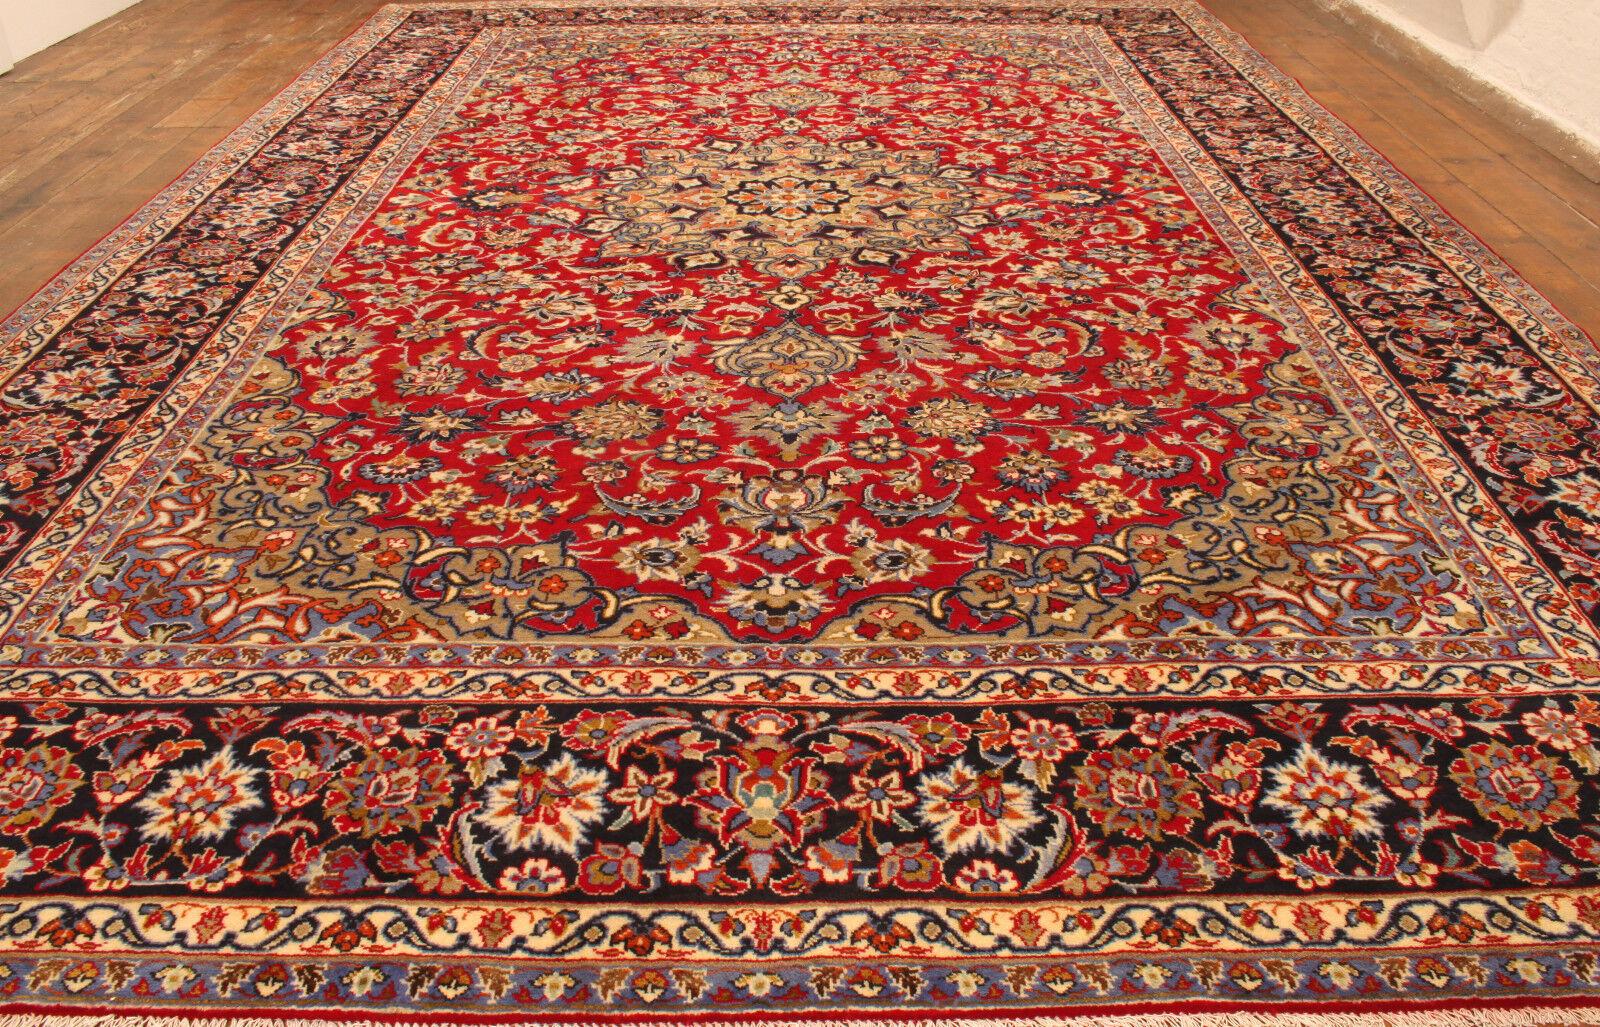 Wool Handmade Vintage Persian Style Kashan Rug 9.6' x 14.1', 1960s - 1T15 For Sale